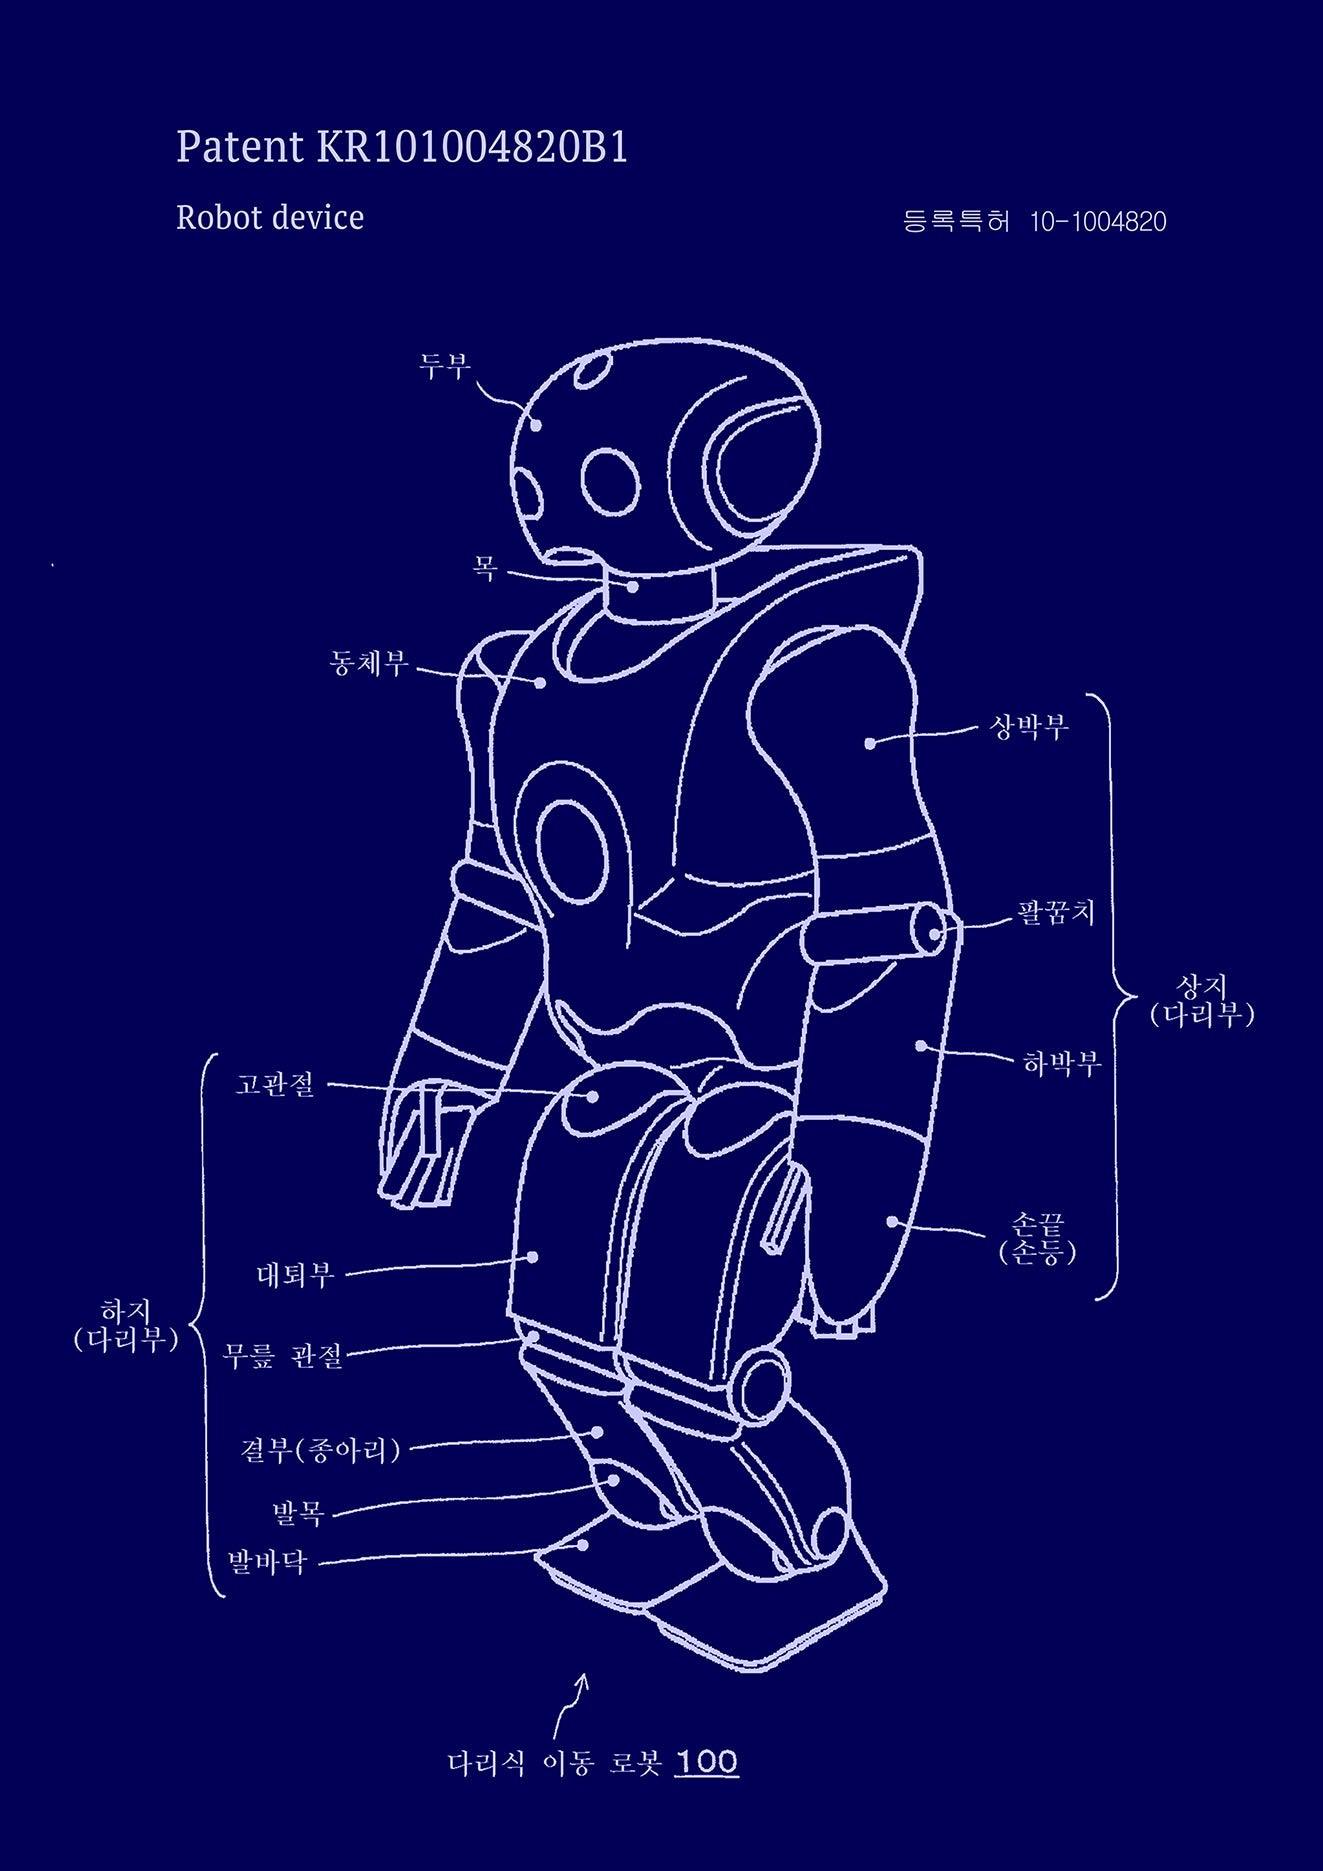 ROBOT PATENT PRINT: Science Blueprint Artwork - Pimlico Prints